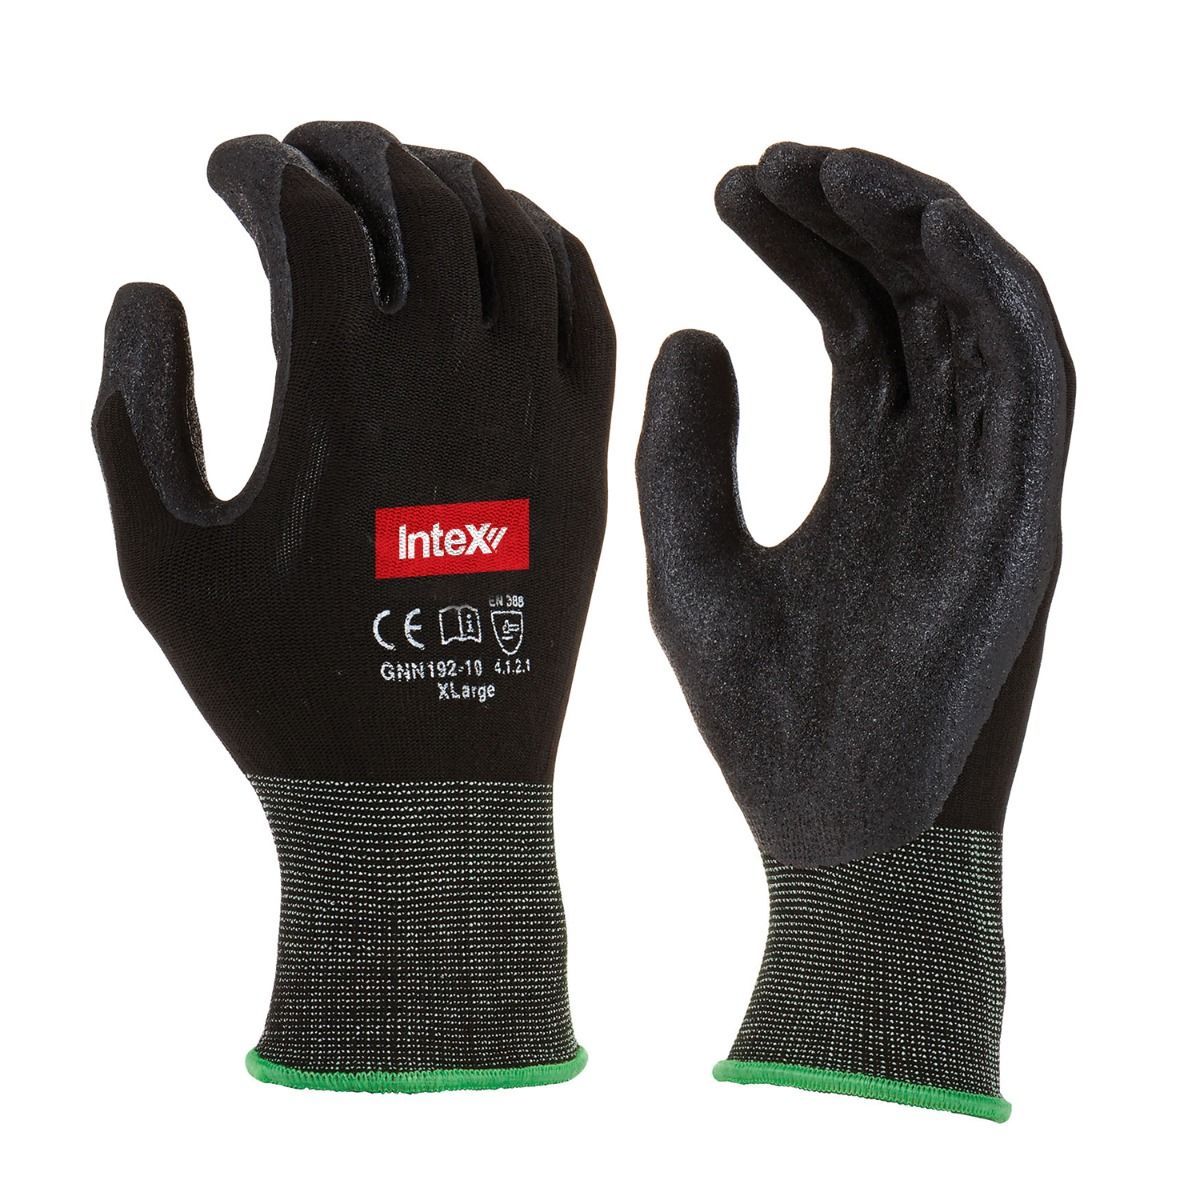 Intex ProtecX® All Purpose Glove with MegaGrip Nitrile Coating